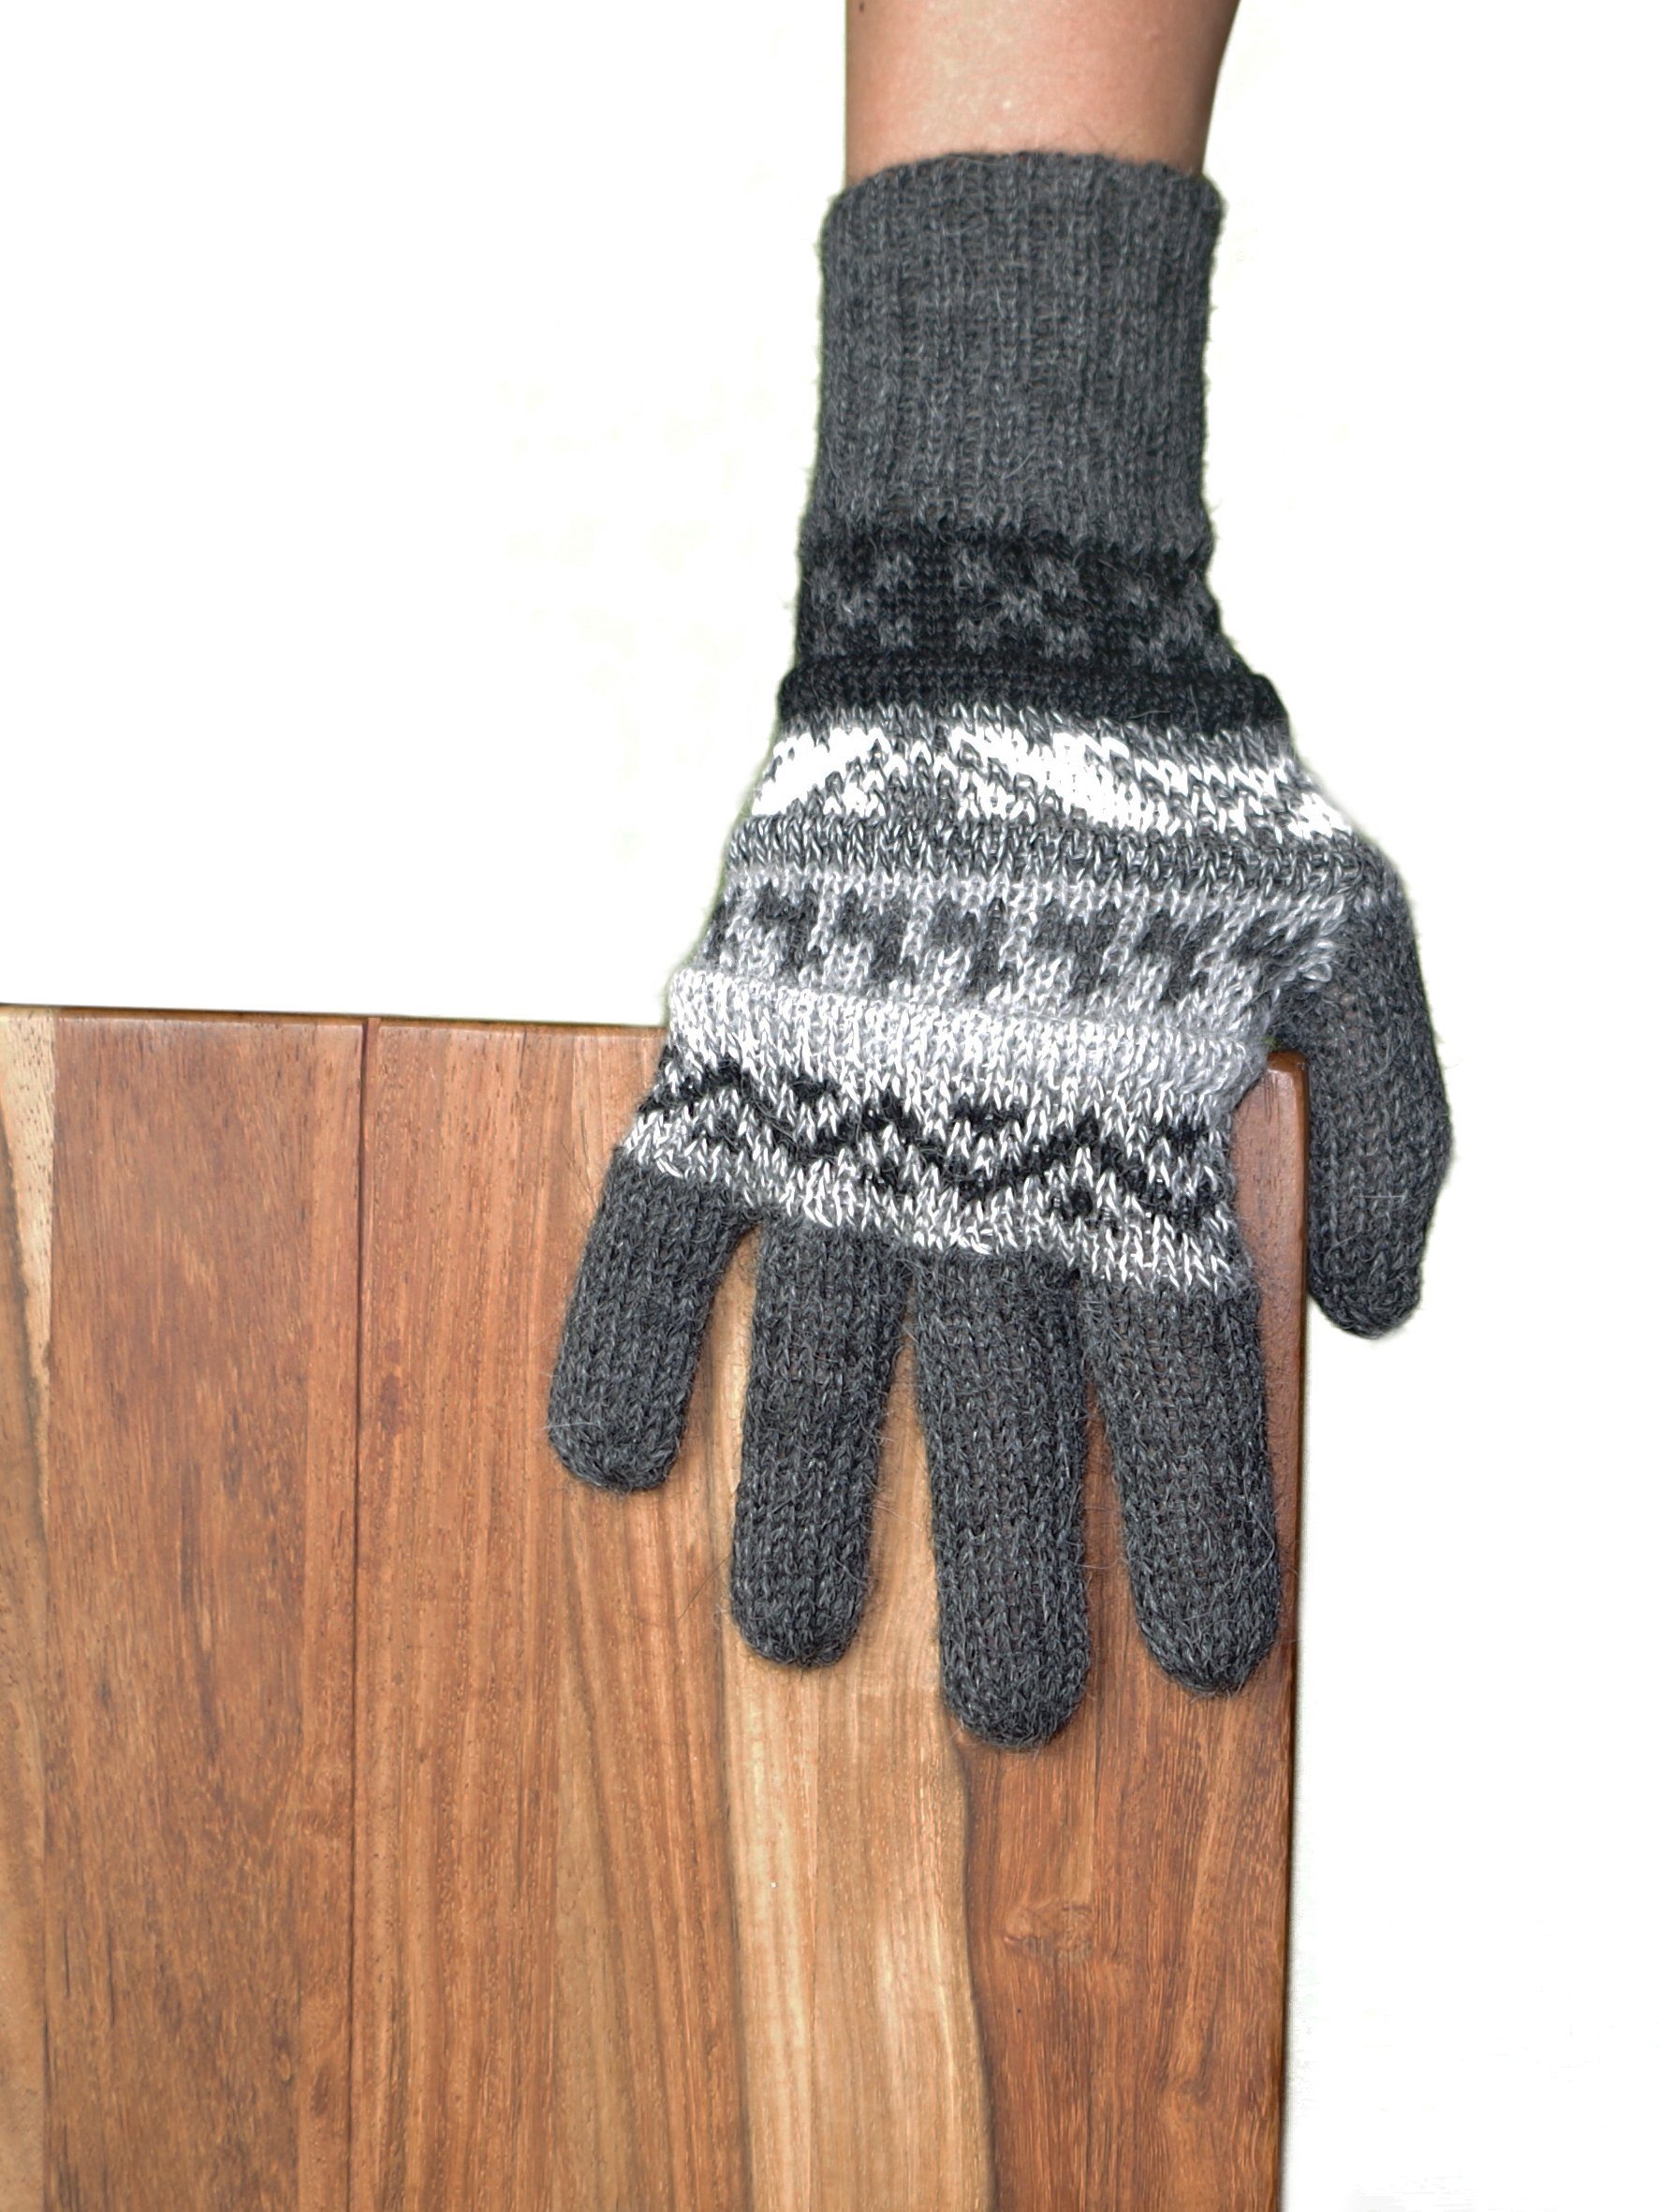 Fingerhandschuhe Guantilissi Gear aus Posh Strickhandschuhe Alpakawolle grau dunkel 100% Alpaka